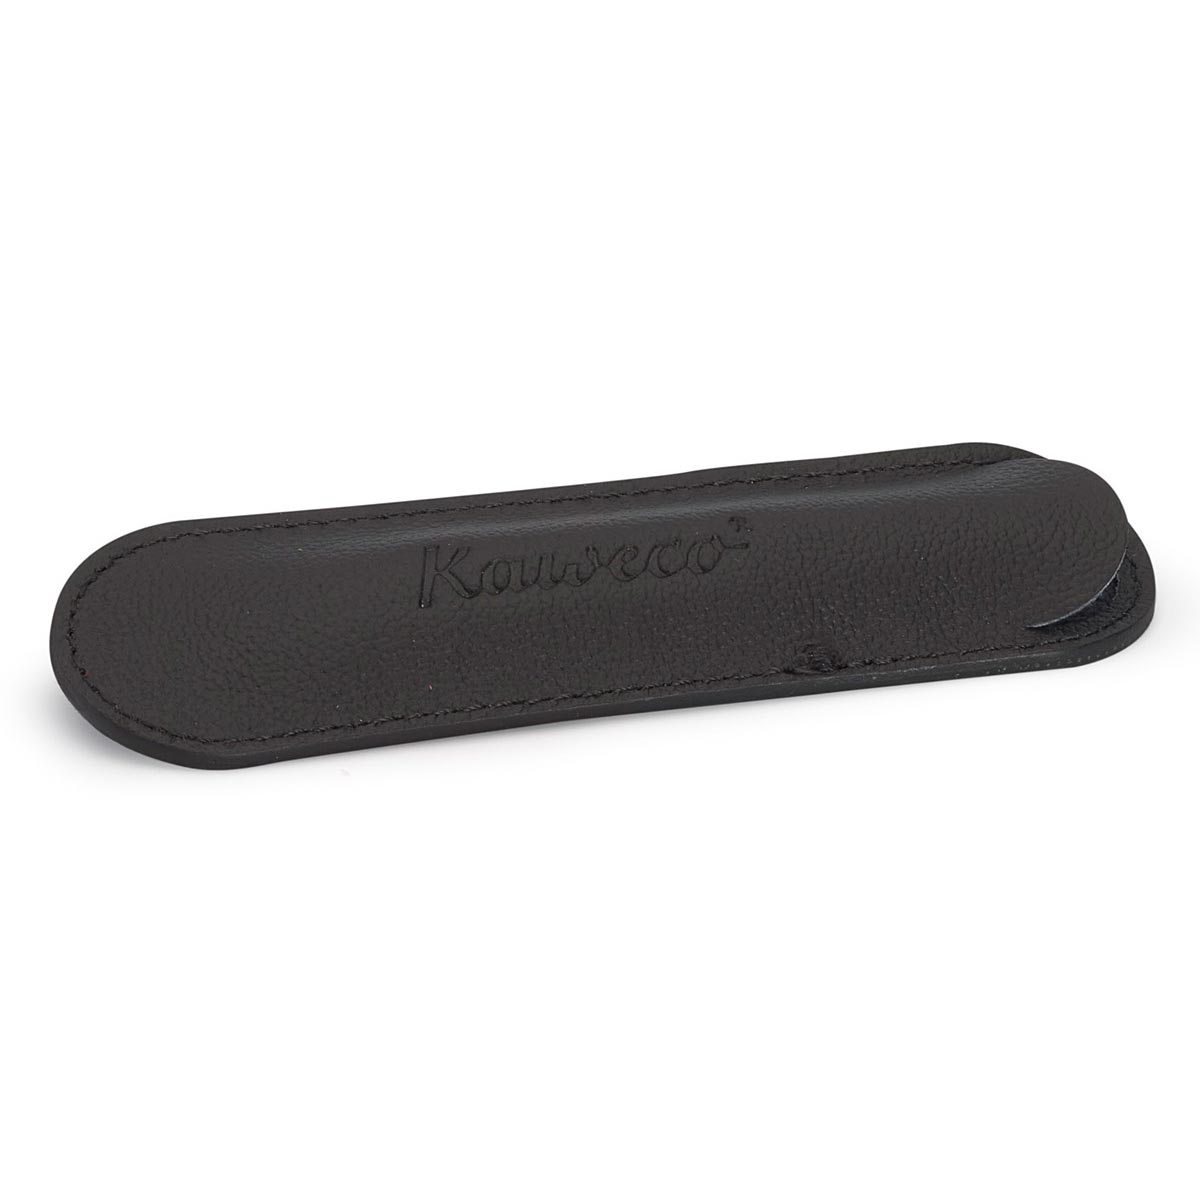 Kaweco leather case long ECO black 1er